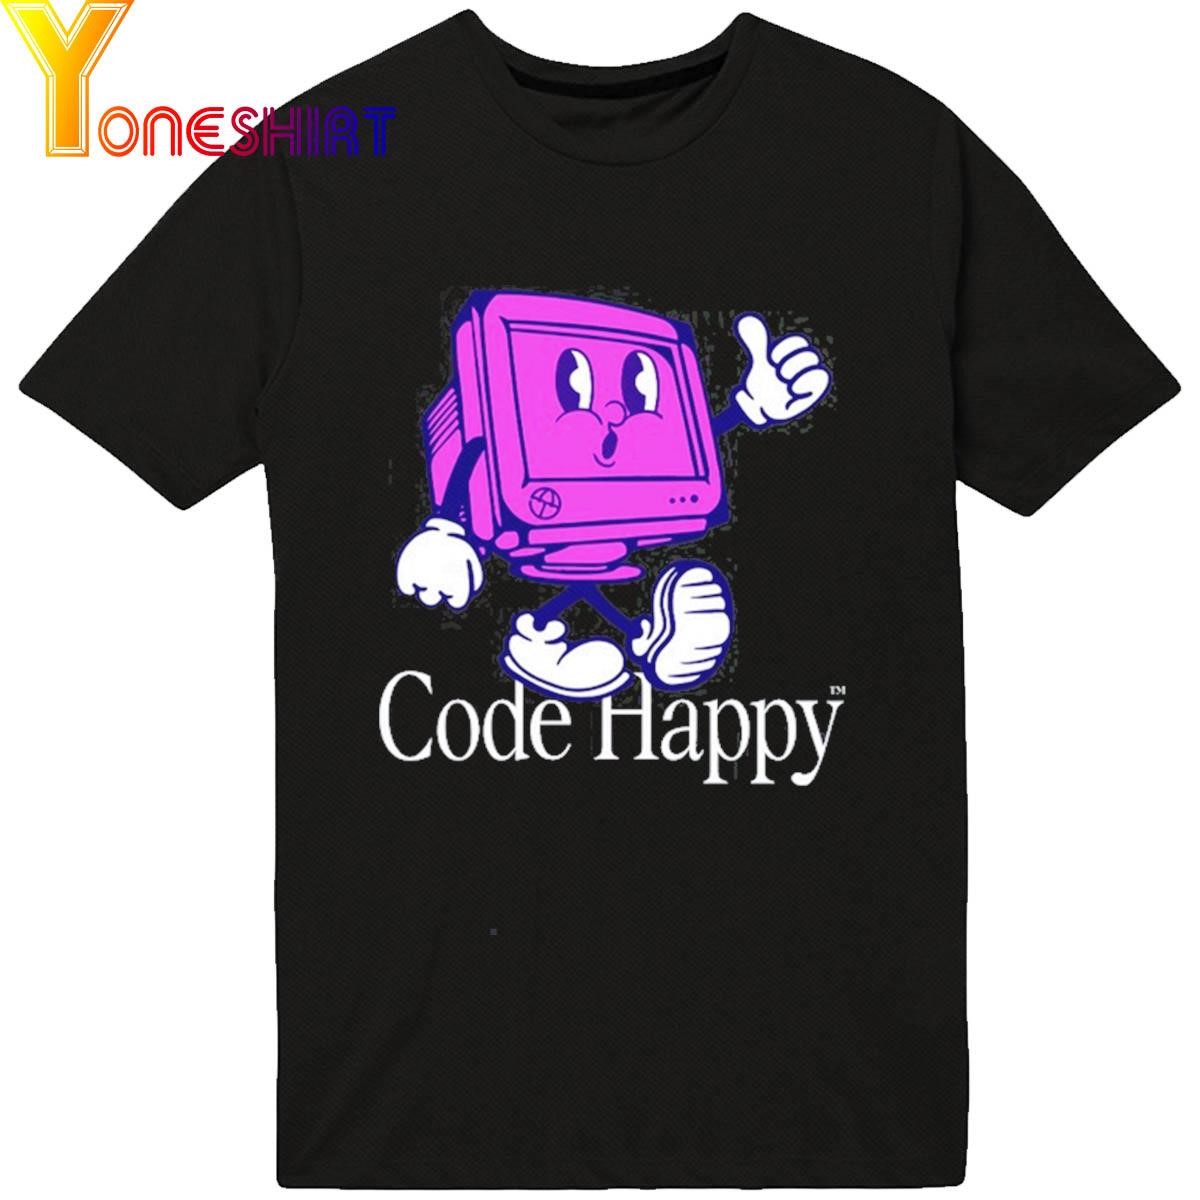 Jason Warner Poolside Code Happy shirt